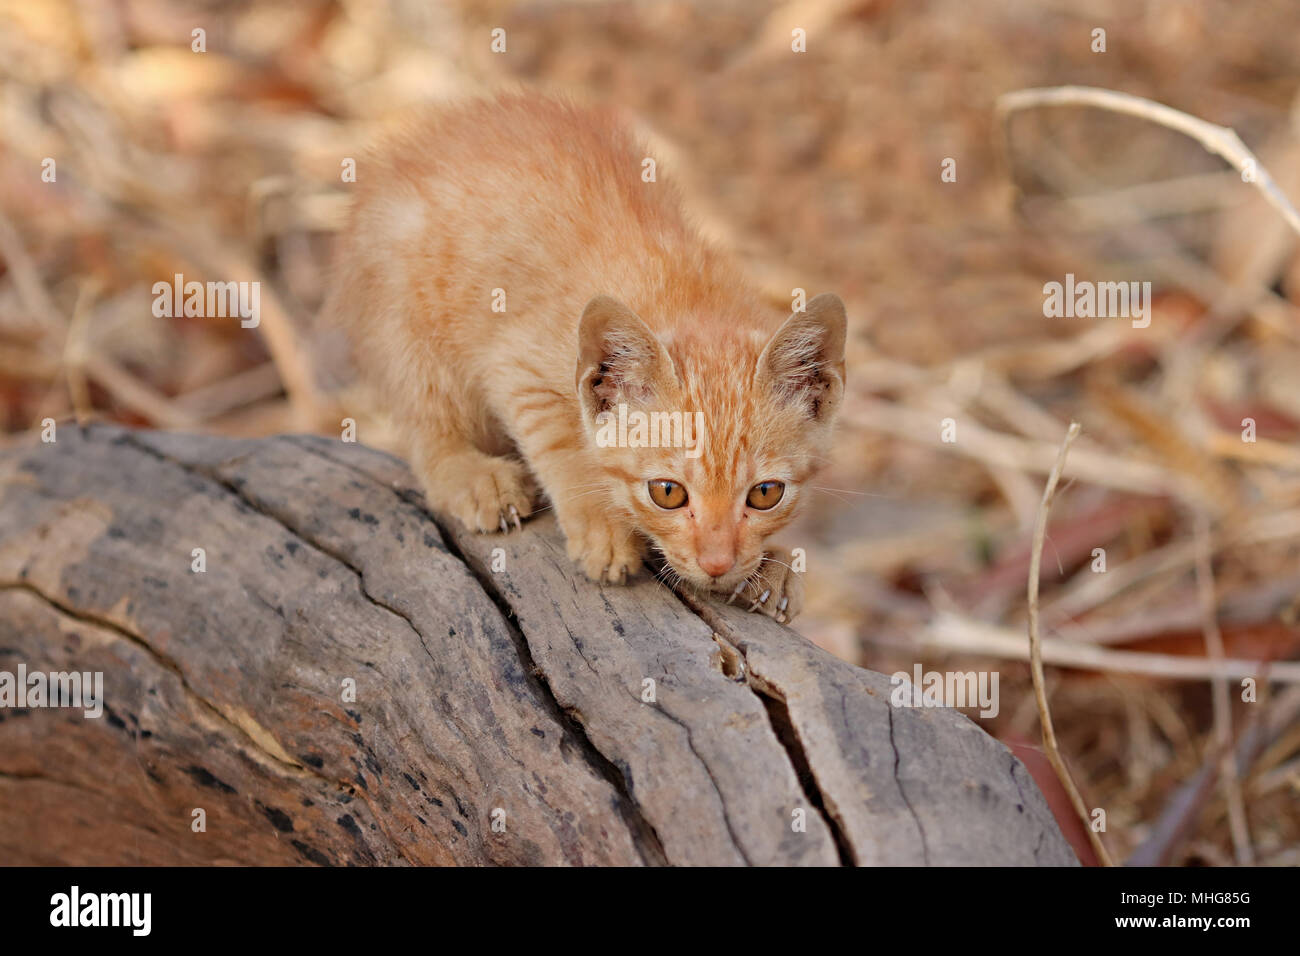 Innocent looking orange tabby kitten on a dried bark of a tree Stock Photo